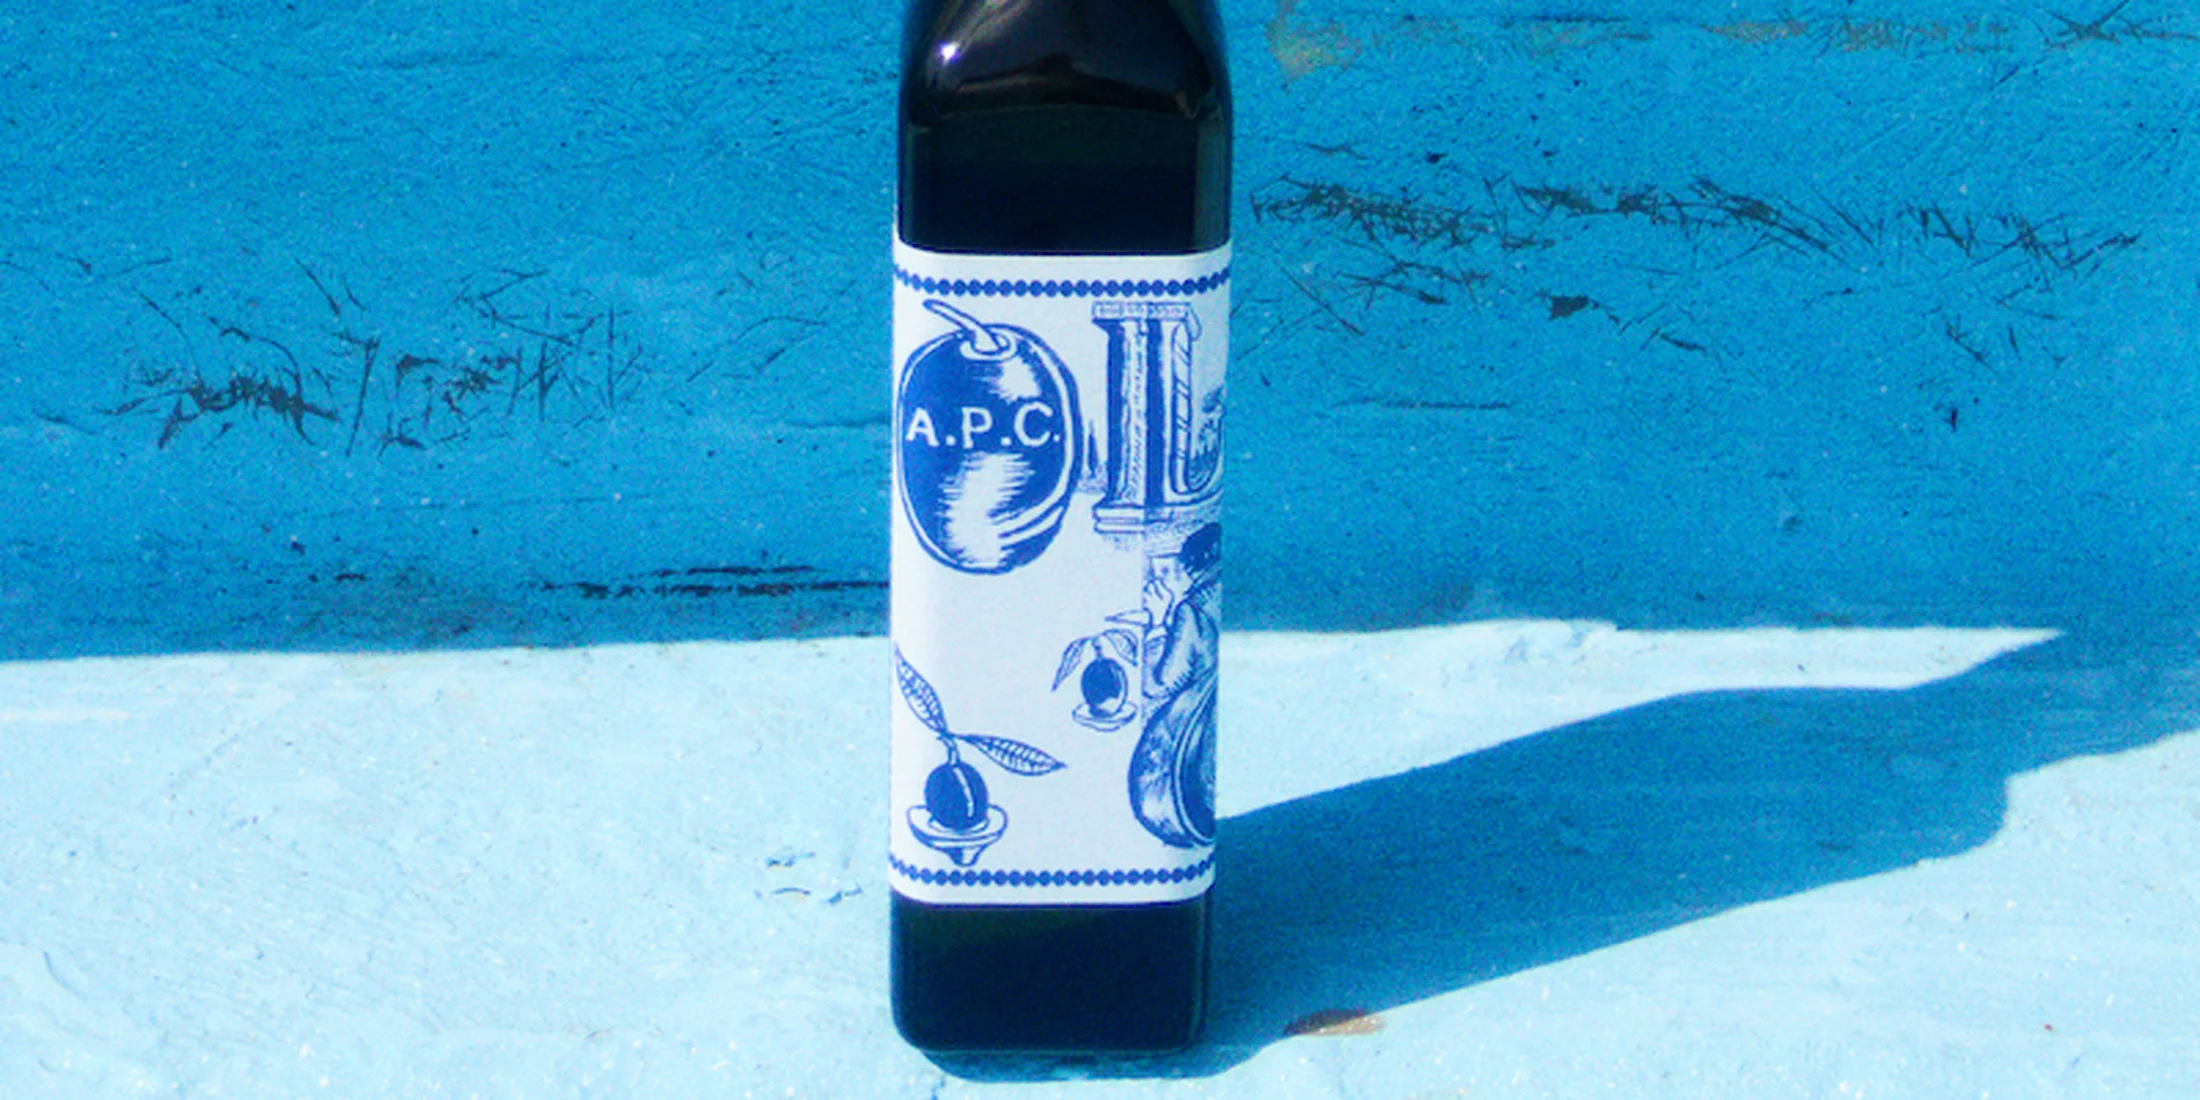 【A.P.C.】のオリーブオイル、セカンドシーズンのボトルが到着。素材の魅力を引き立てるフレッシュでまろやかな風味に注目